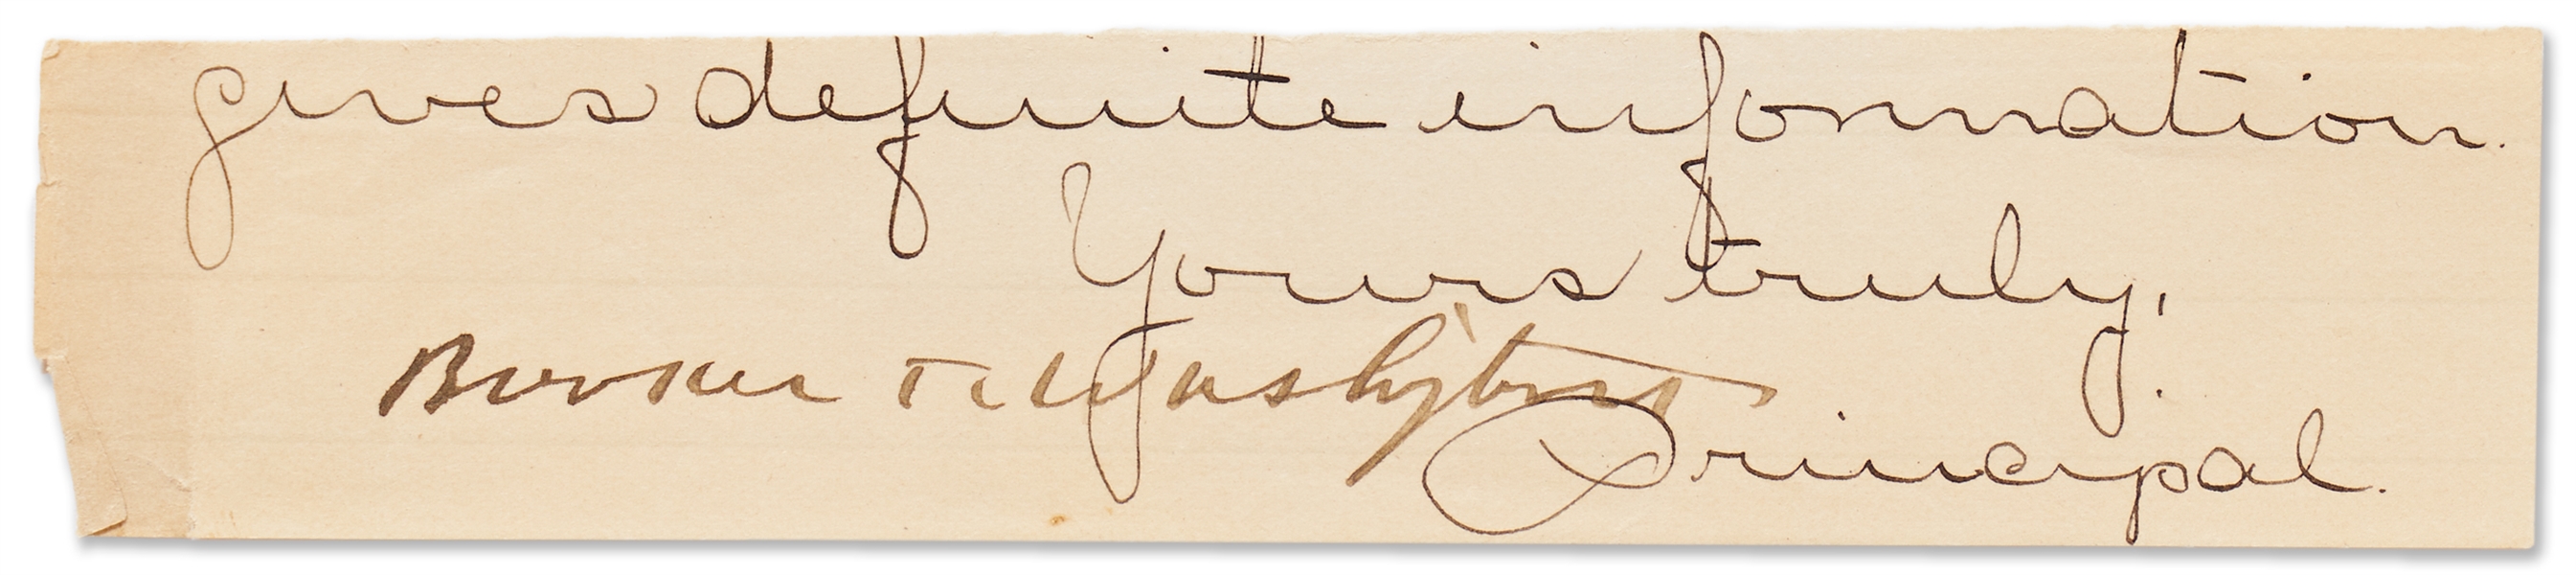 Booker T. Washington Signature